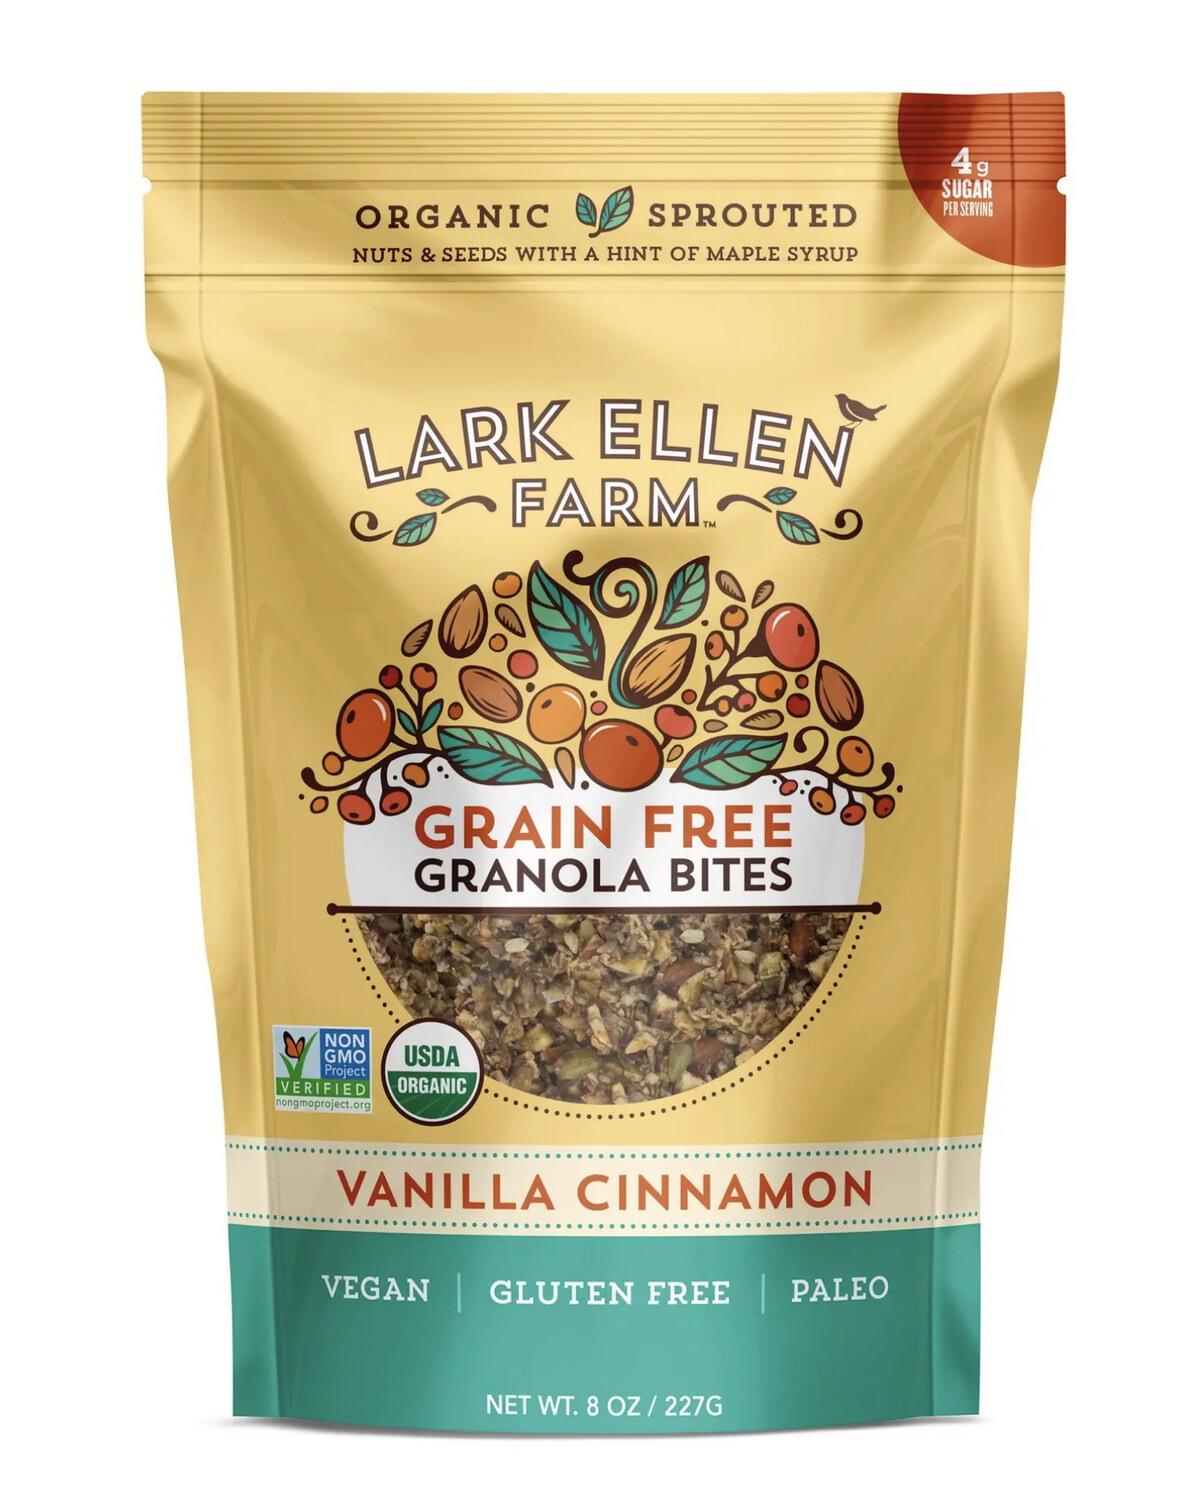 Sprouted Grain-Free Granola Bites - Lark Ellen Farm -  8 oz